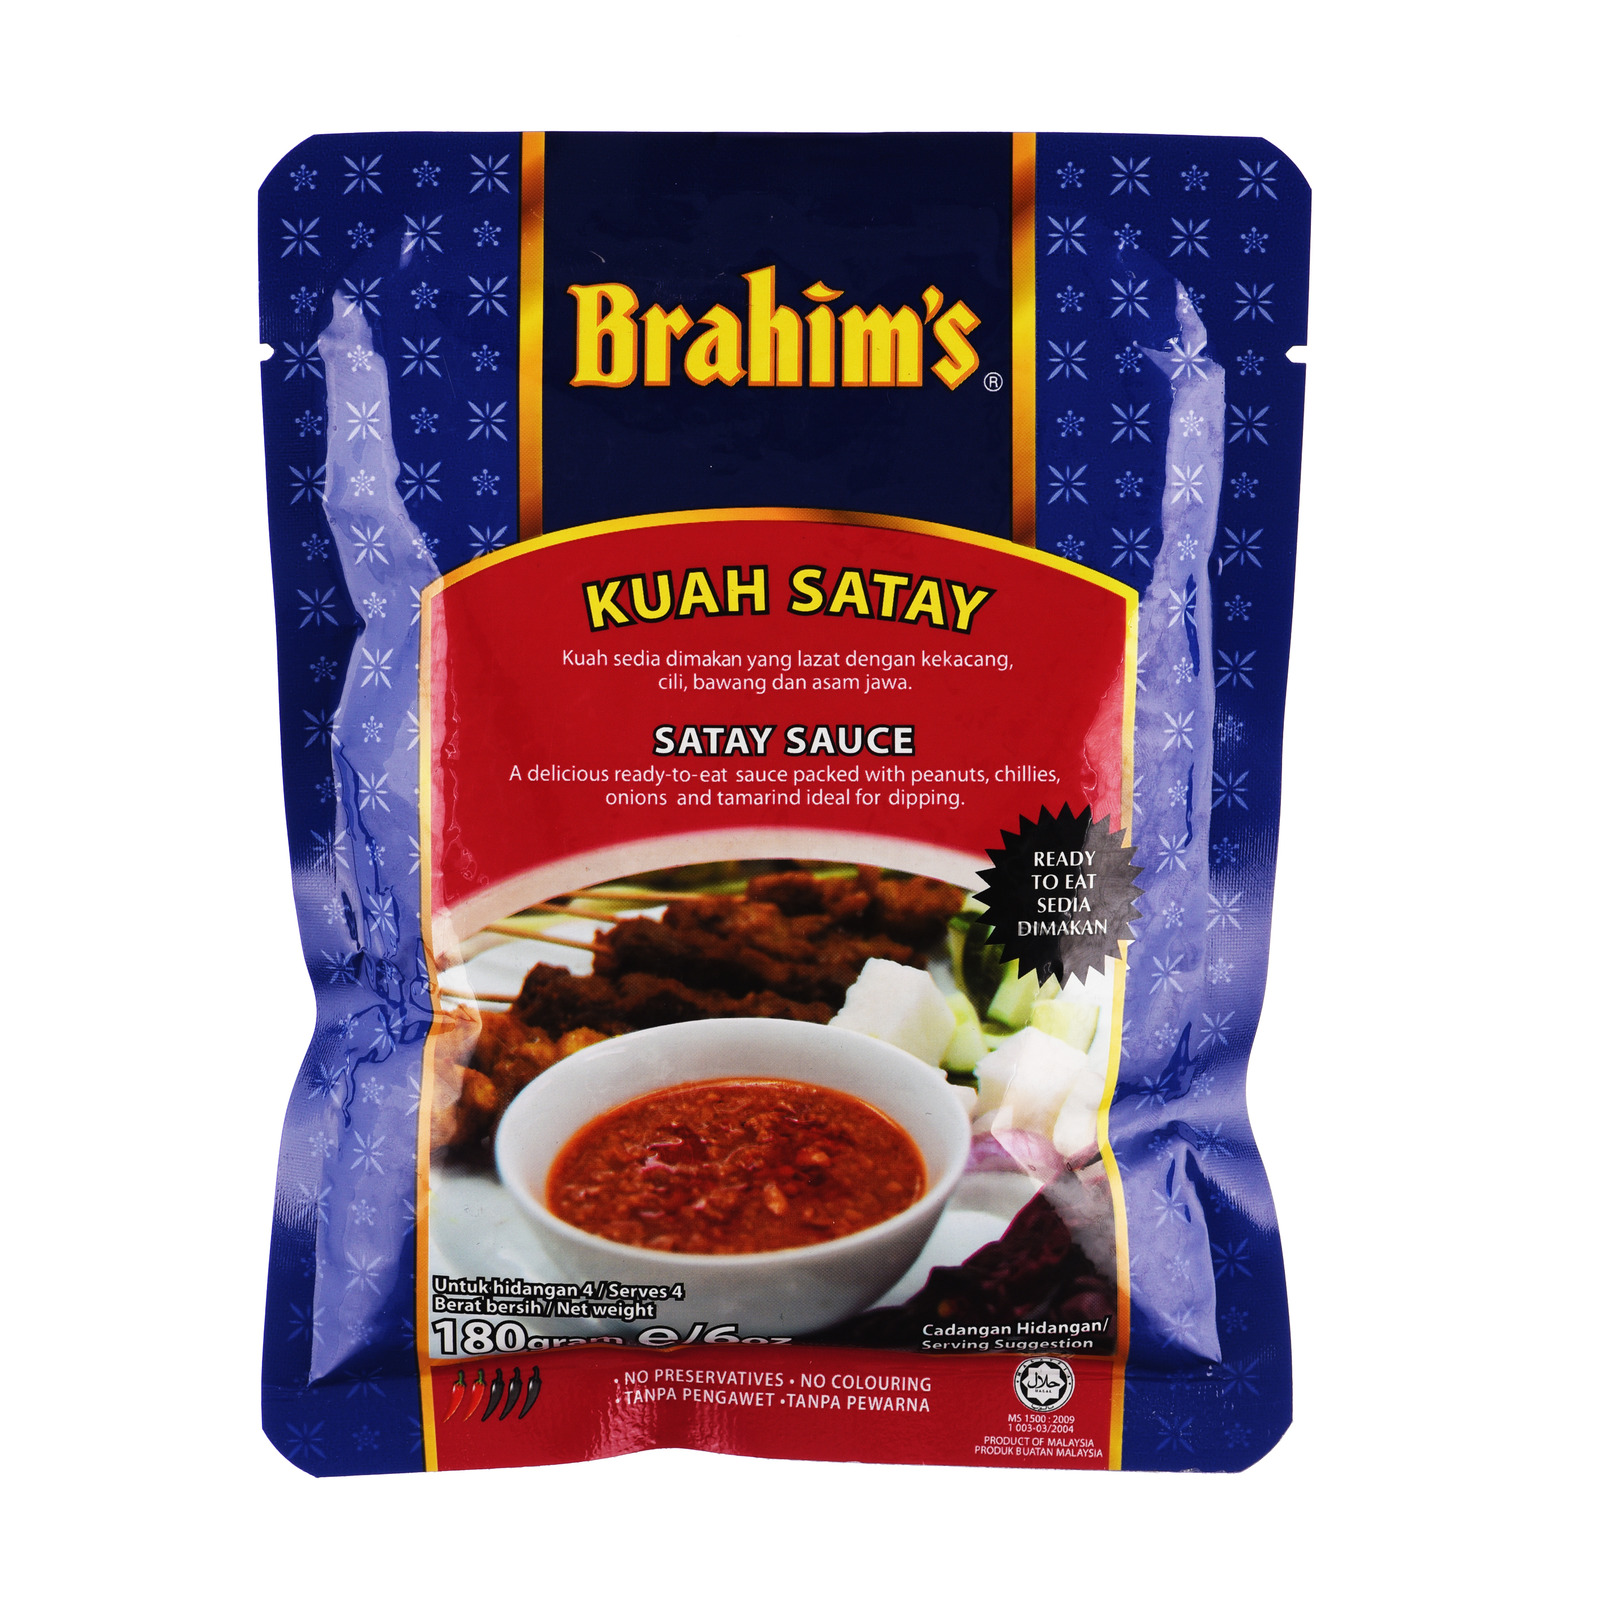 Brahim's Sauce - Satay